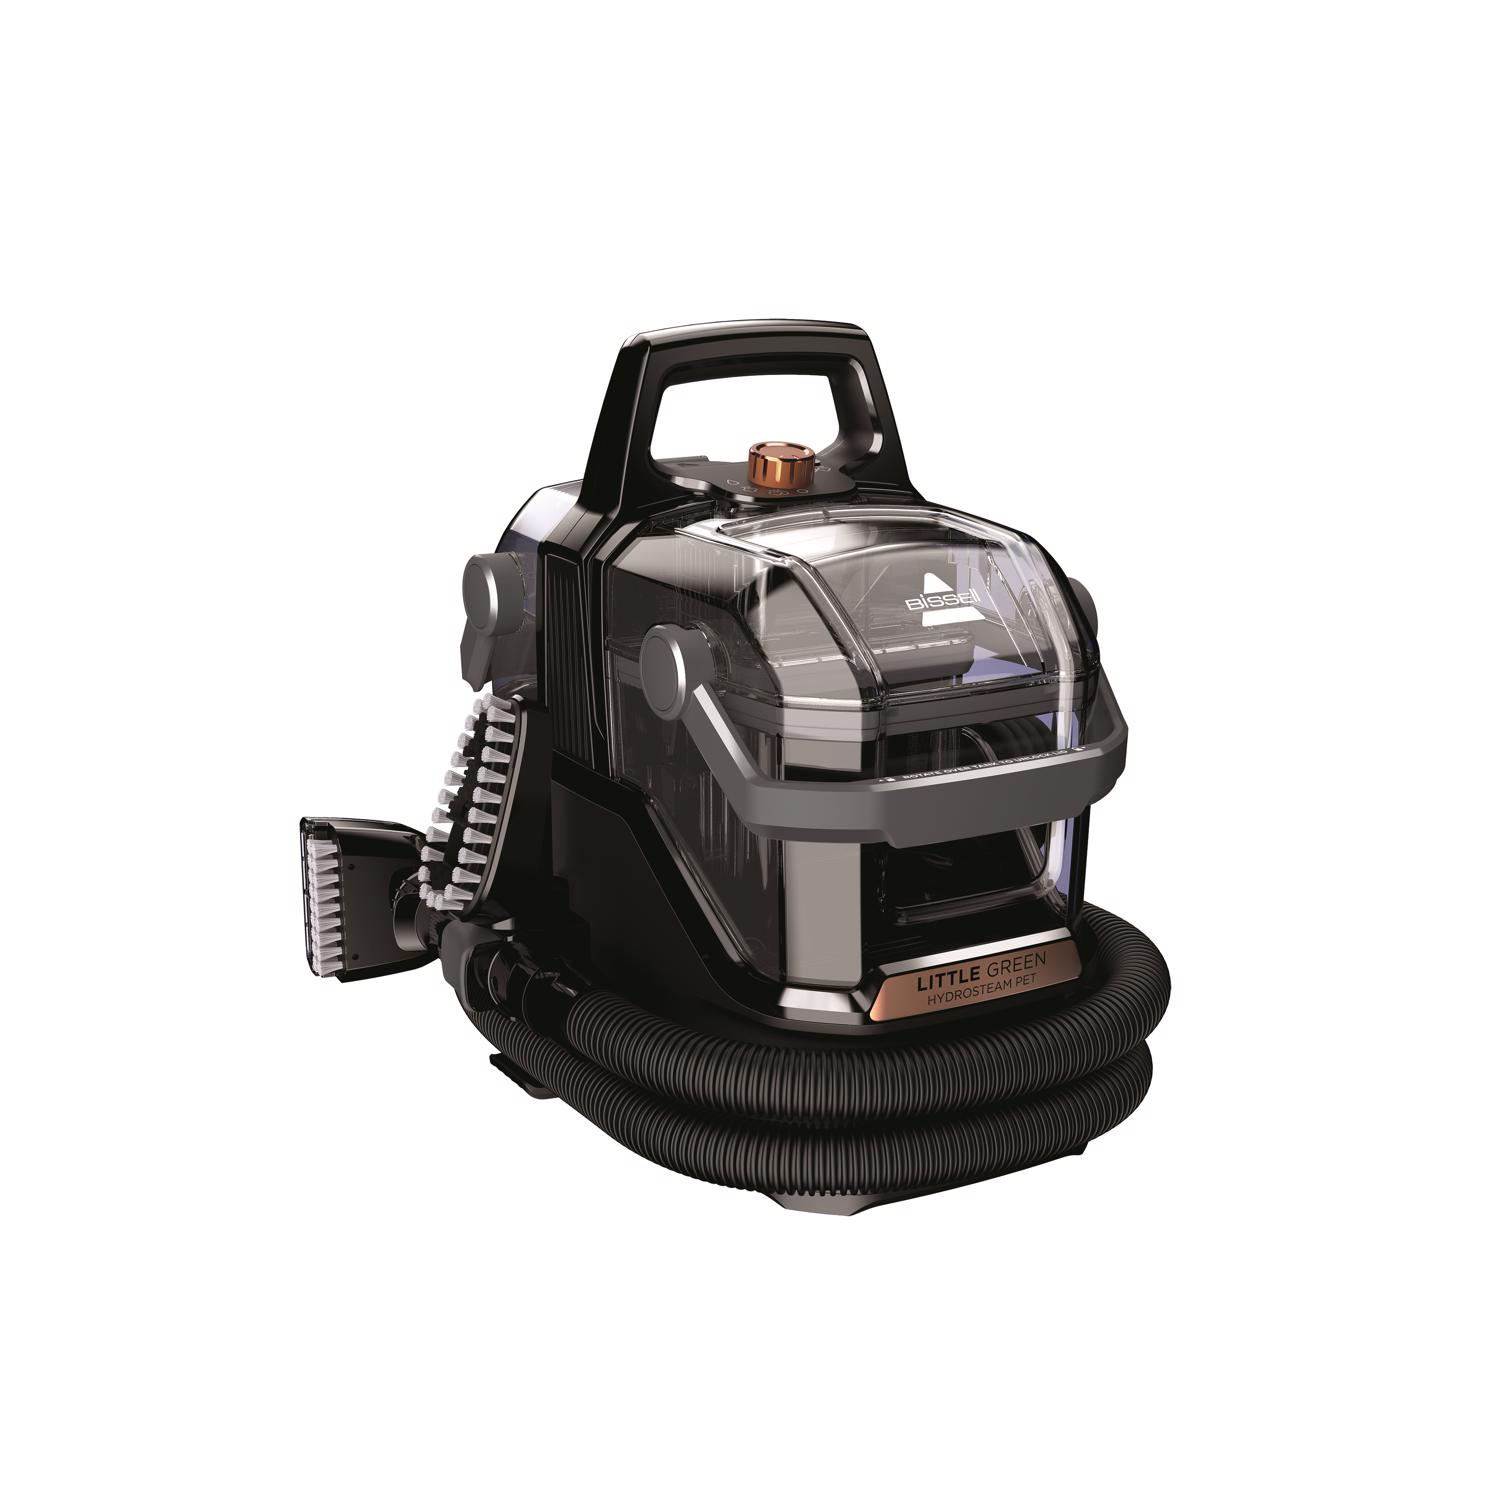 Photos - Steam Cleaner BISSELL Little Green Bagless Carpet Cleaner 9 amps Standard Black 3605 